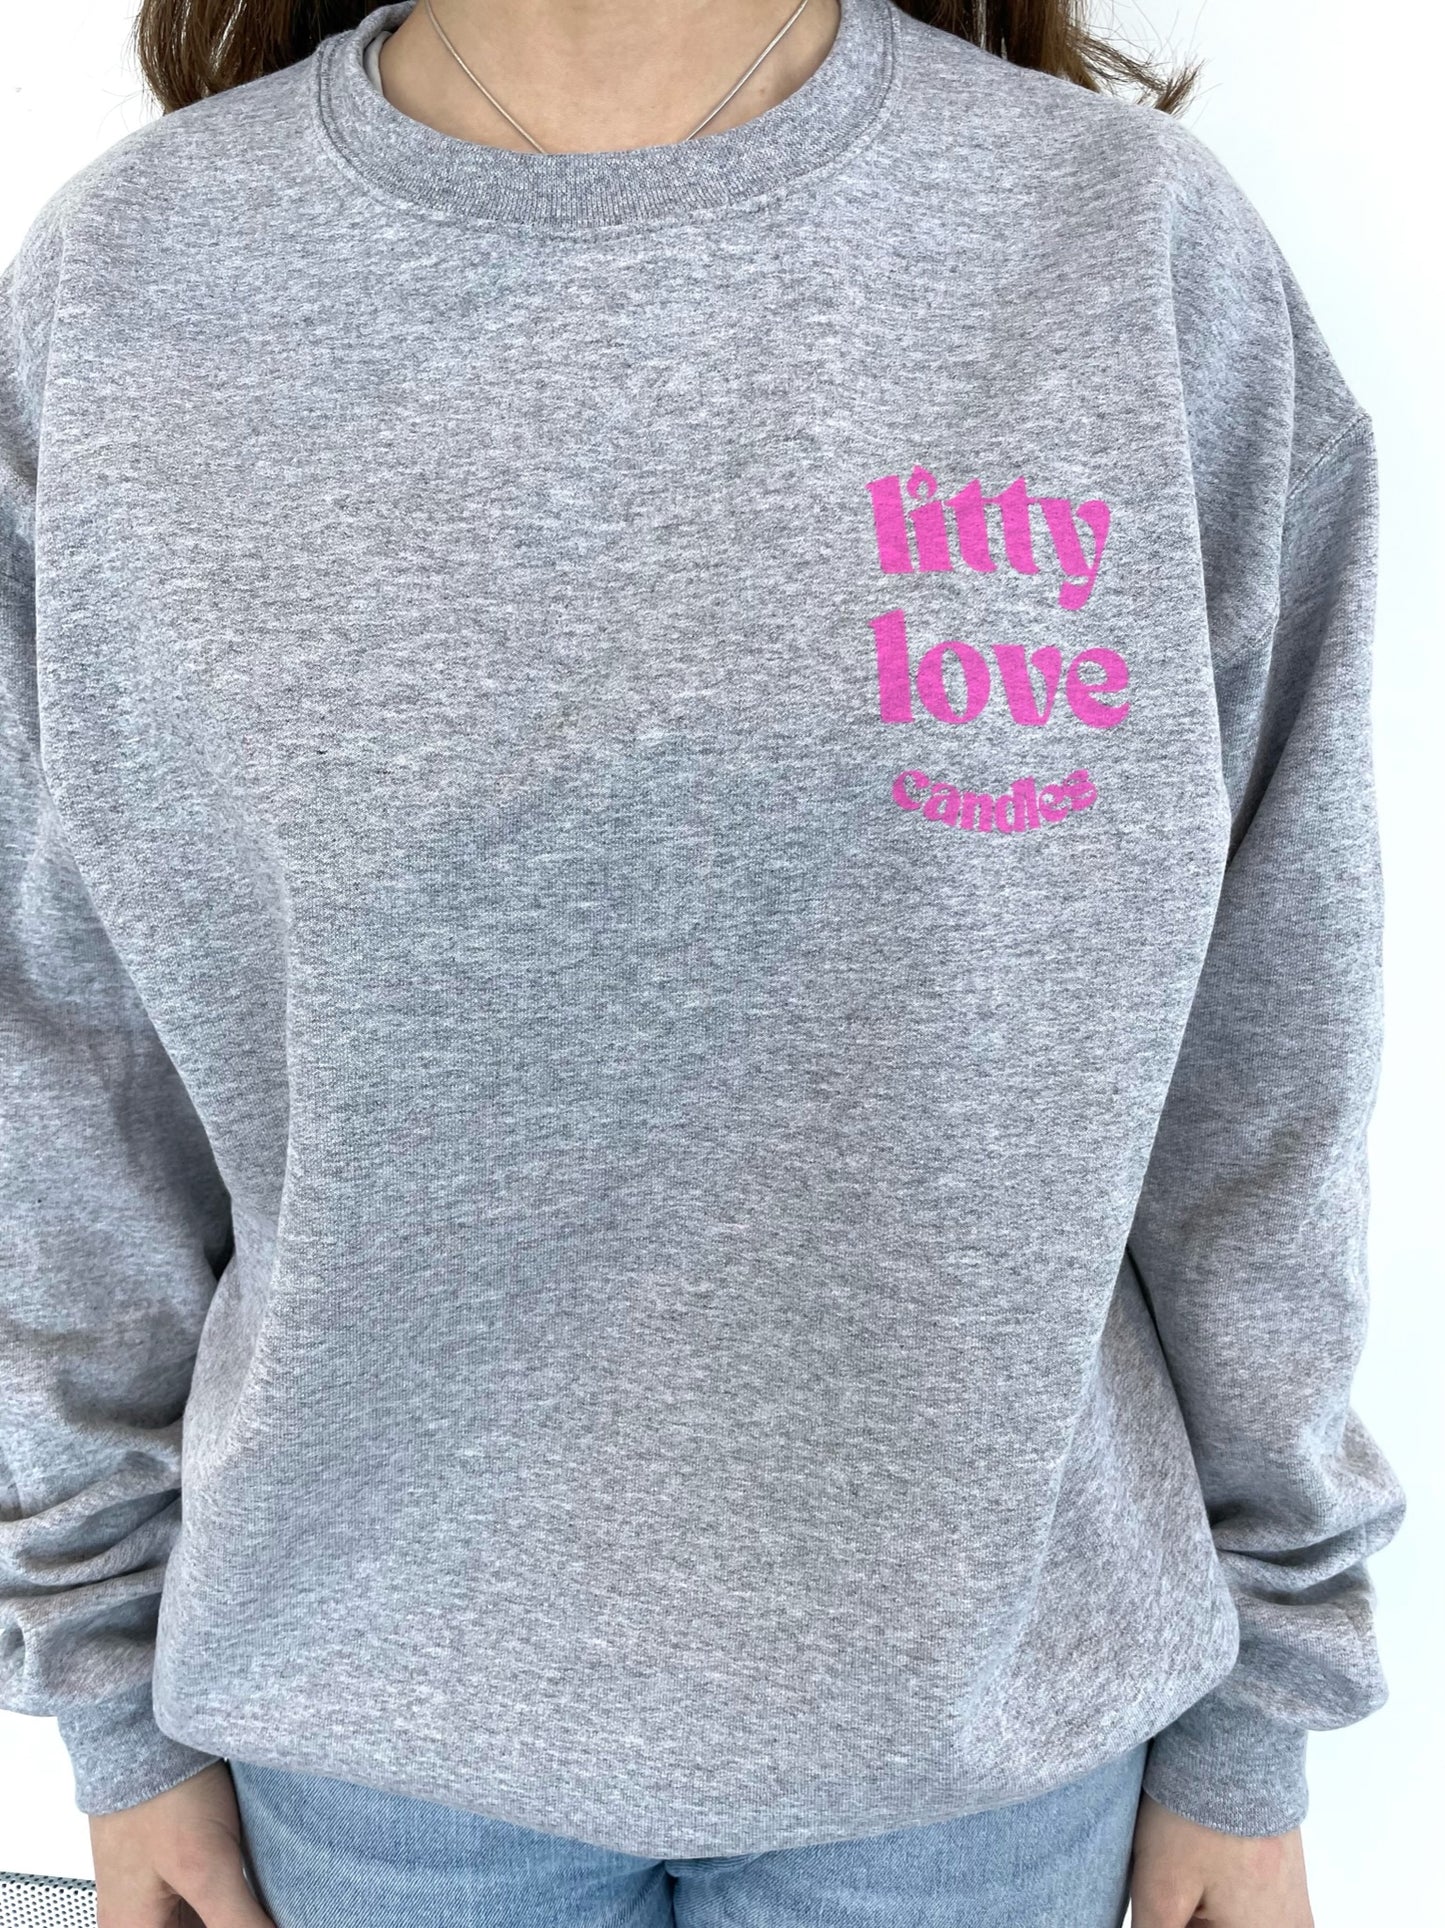 Litty love crewneck sweater